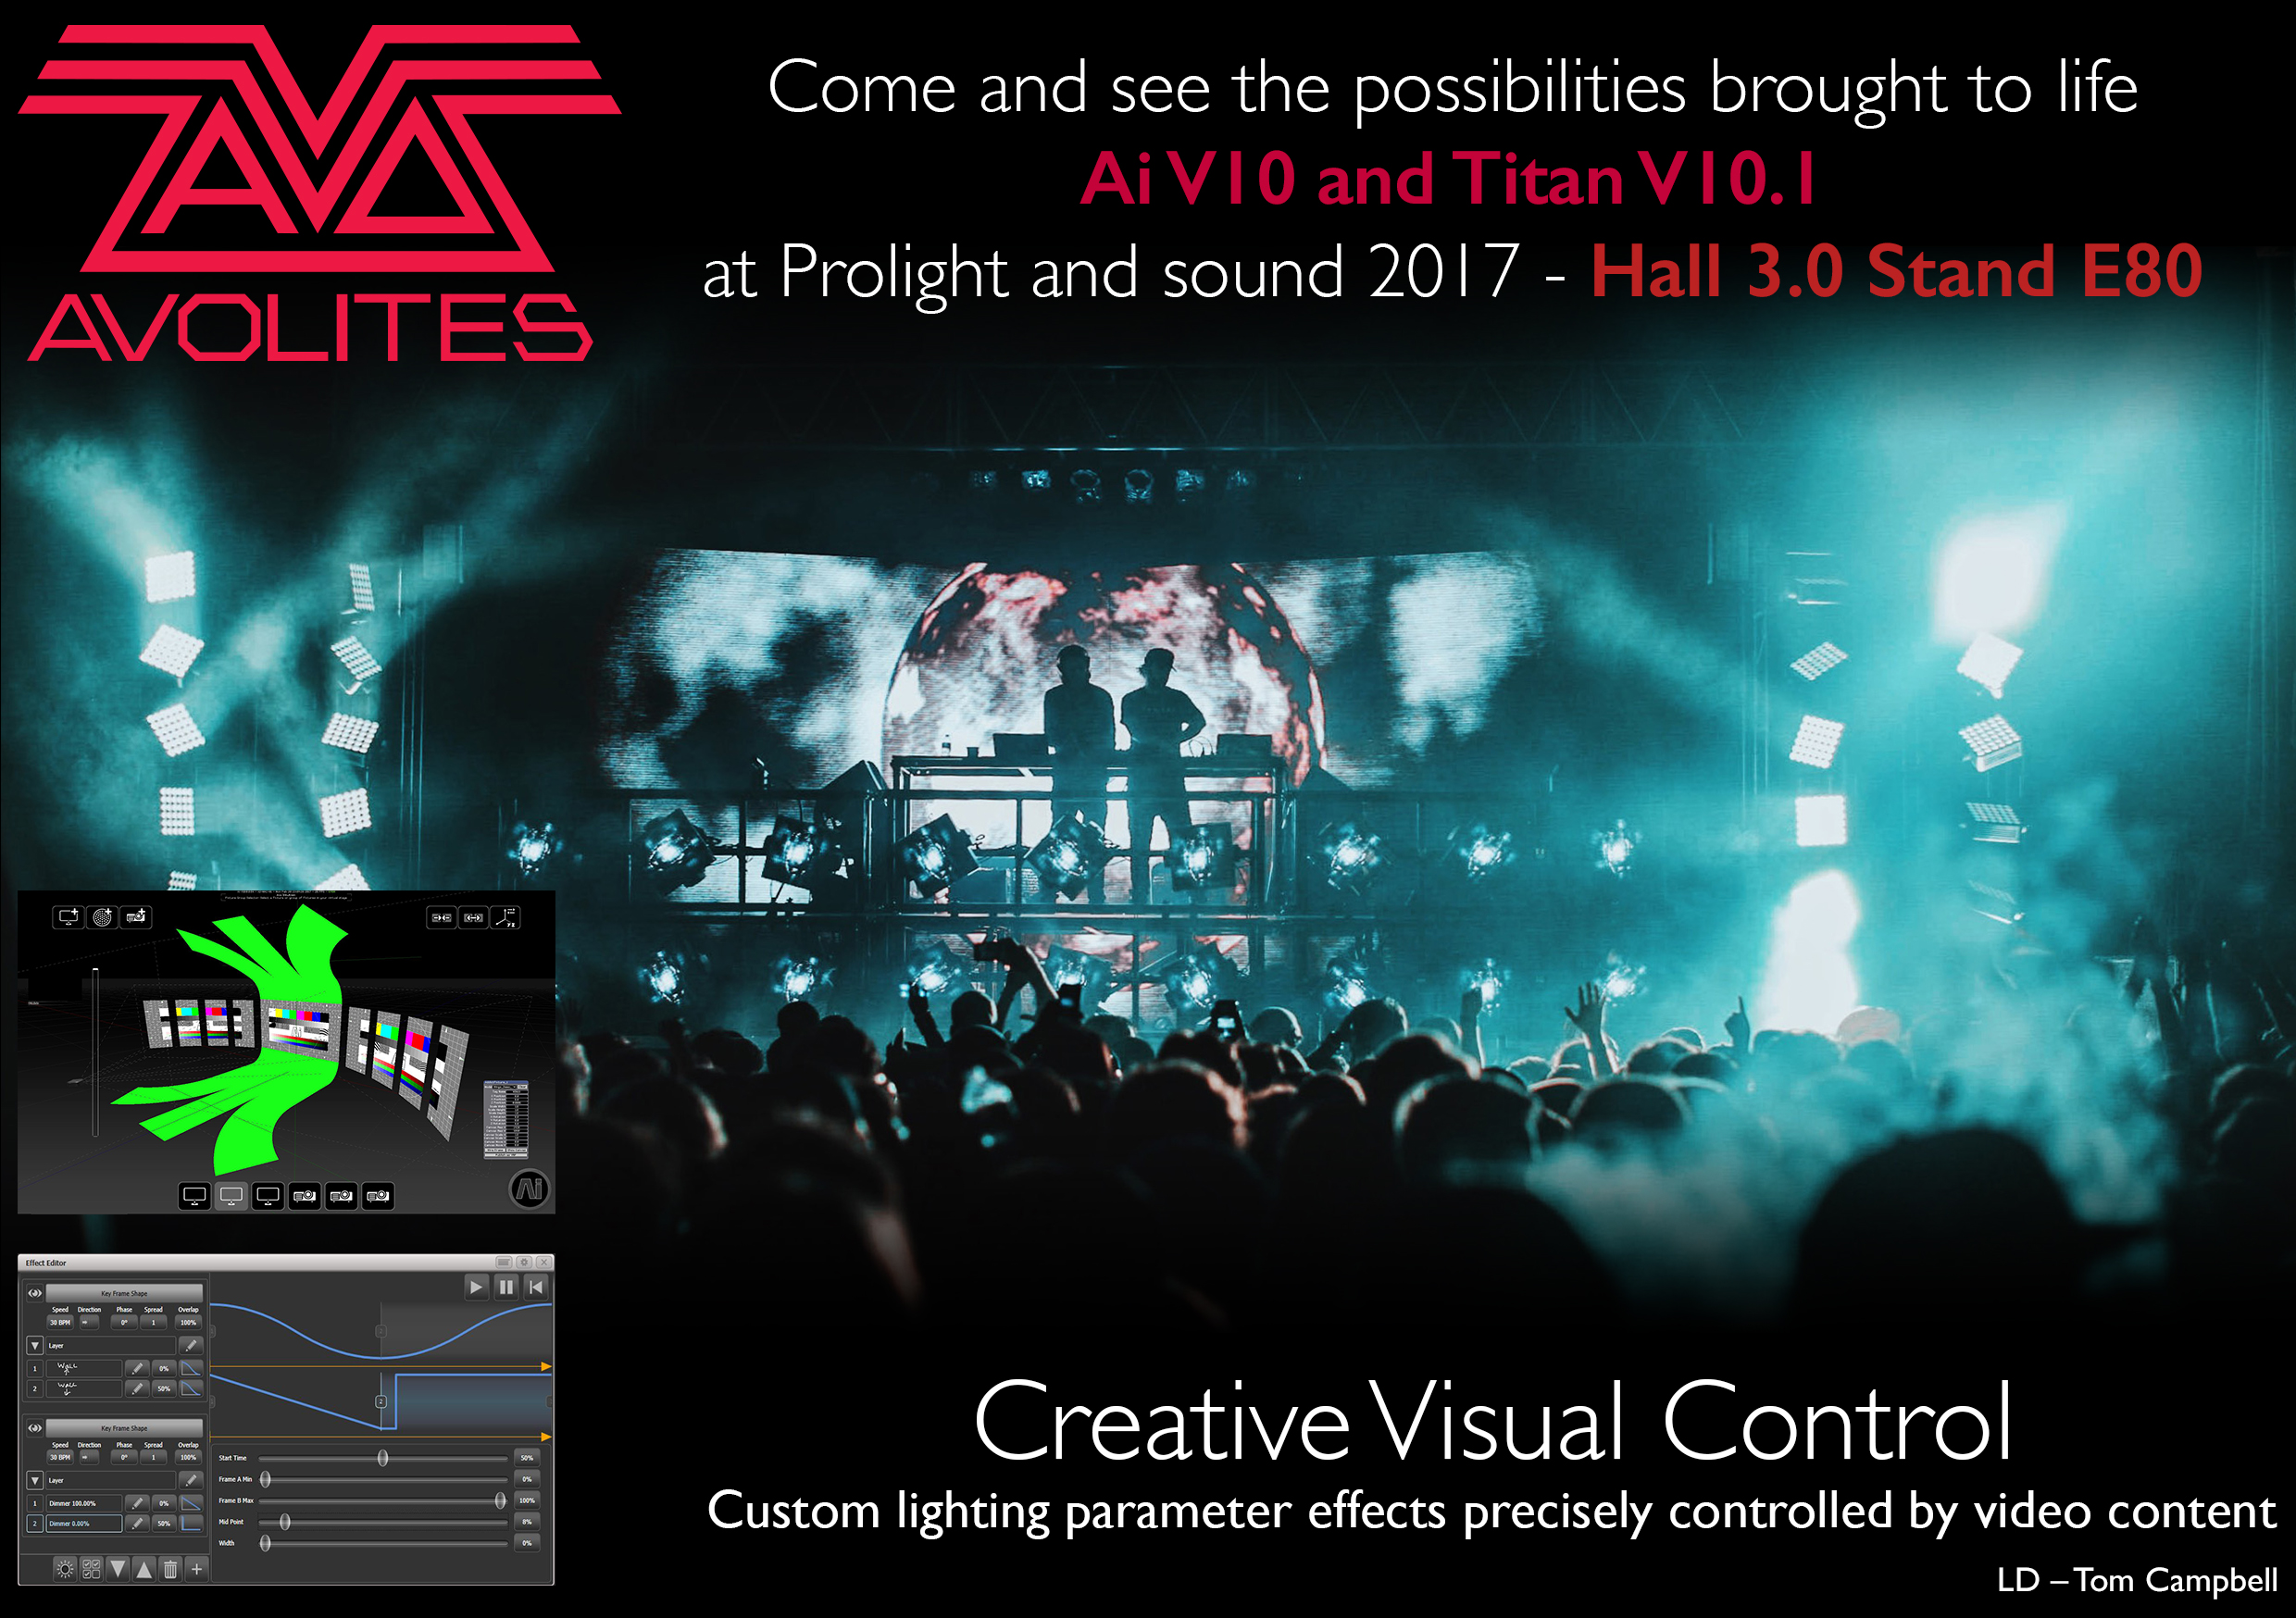 Avolites to showcase trailblazing lighting and video integration at Prolight + Sound 2017